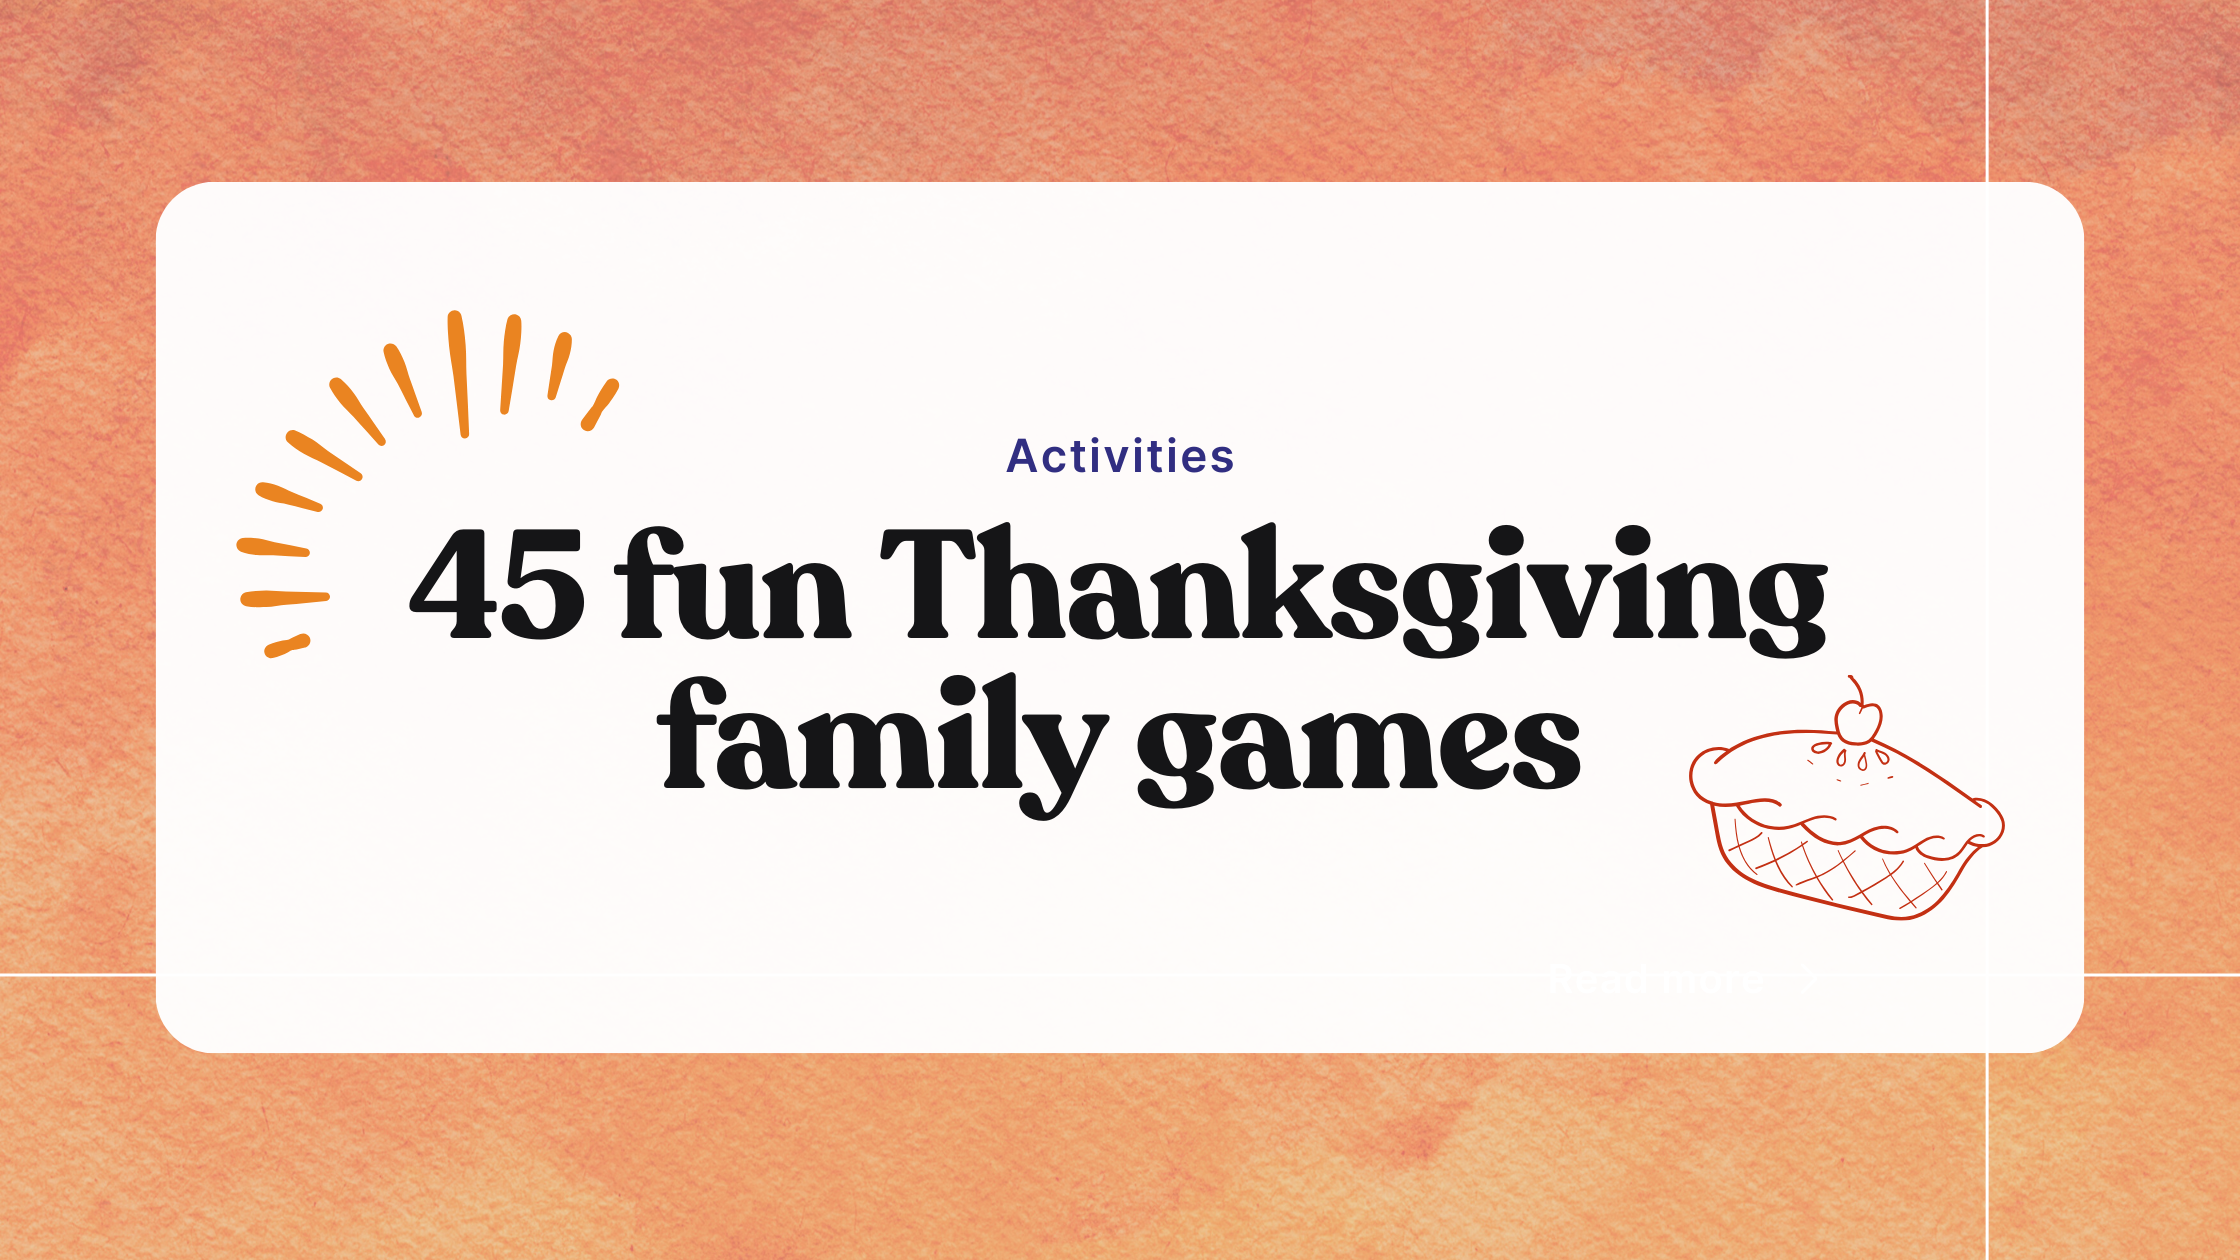 45 fun Thanksgiving family games